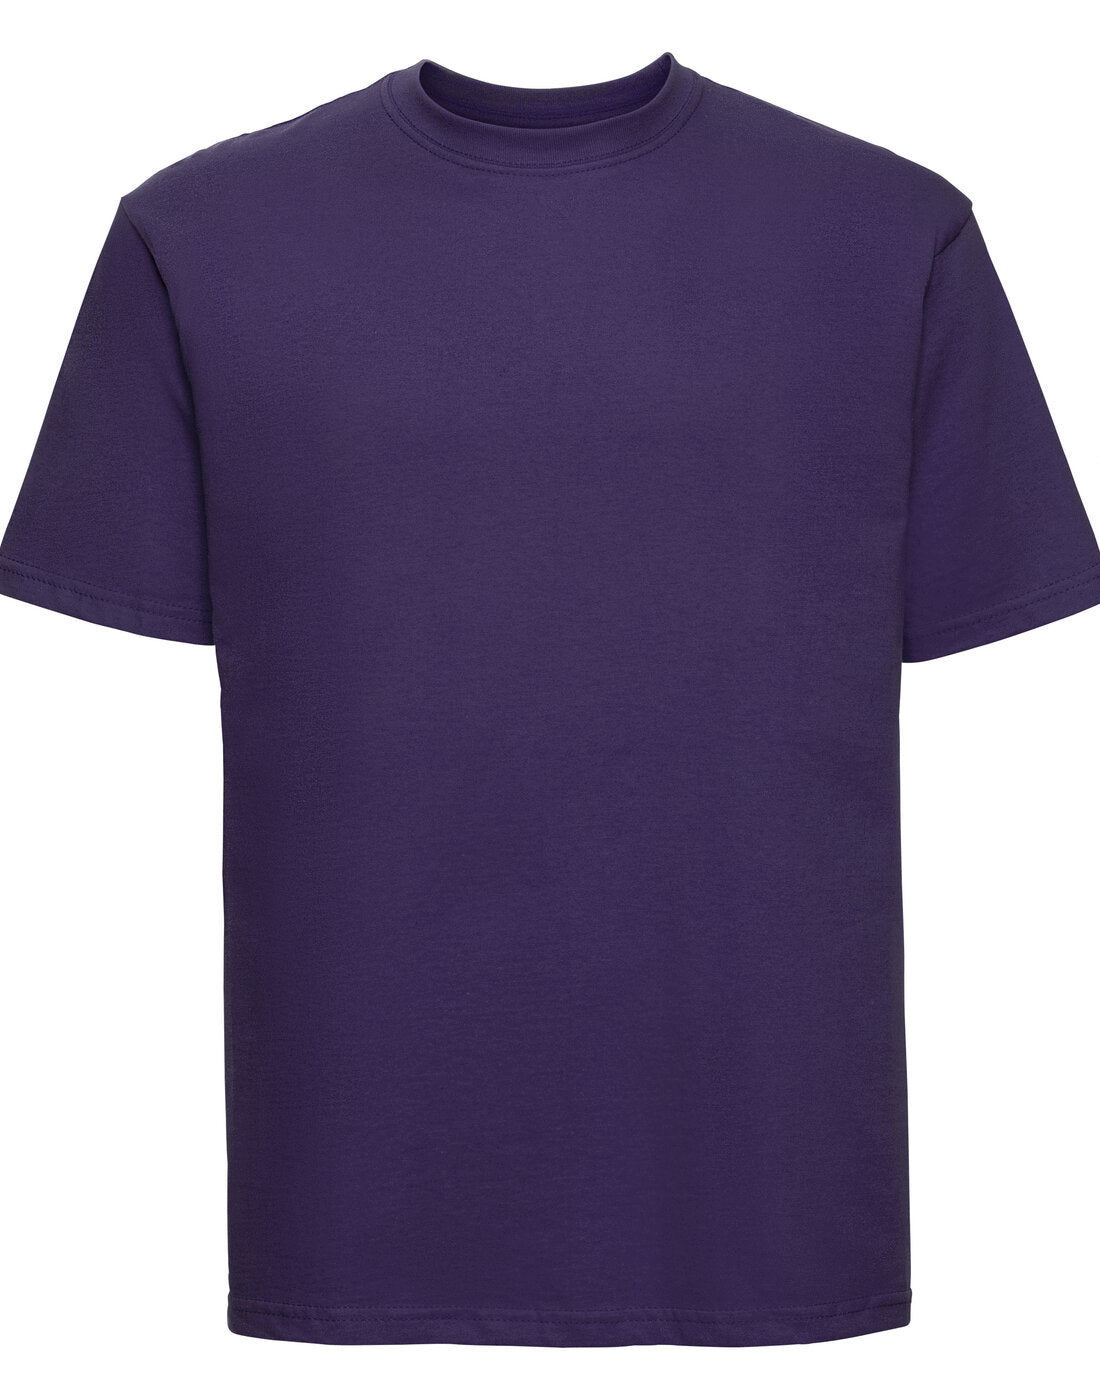 Russell Classic Unisex T-Shirt - Purple